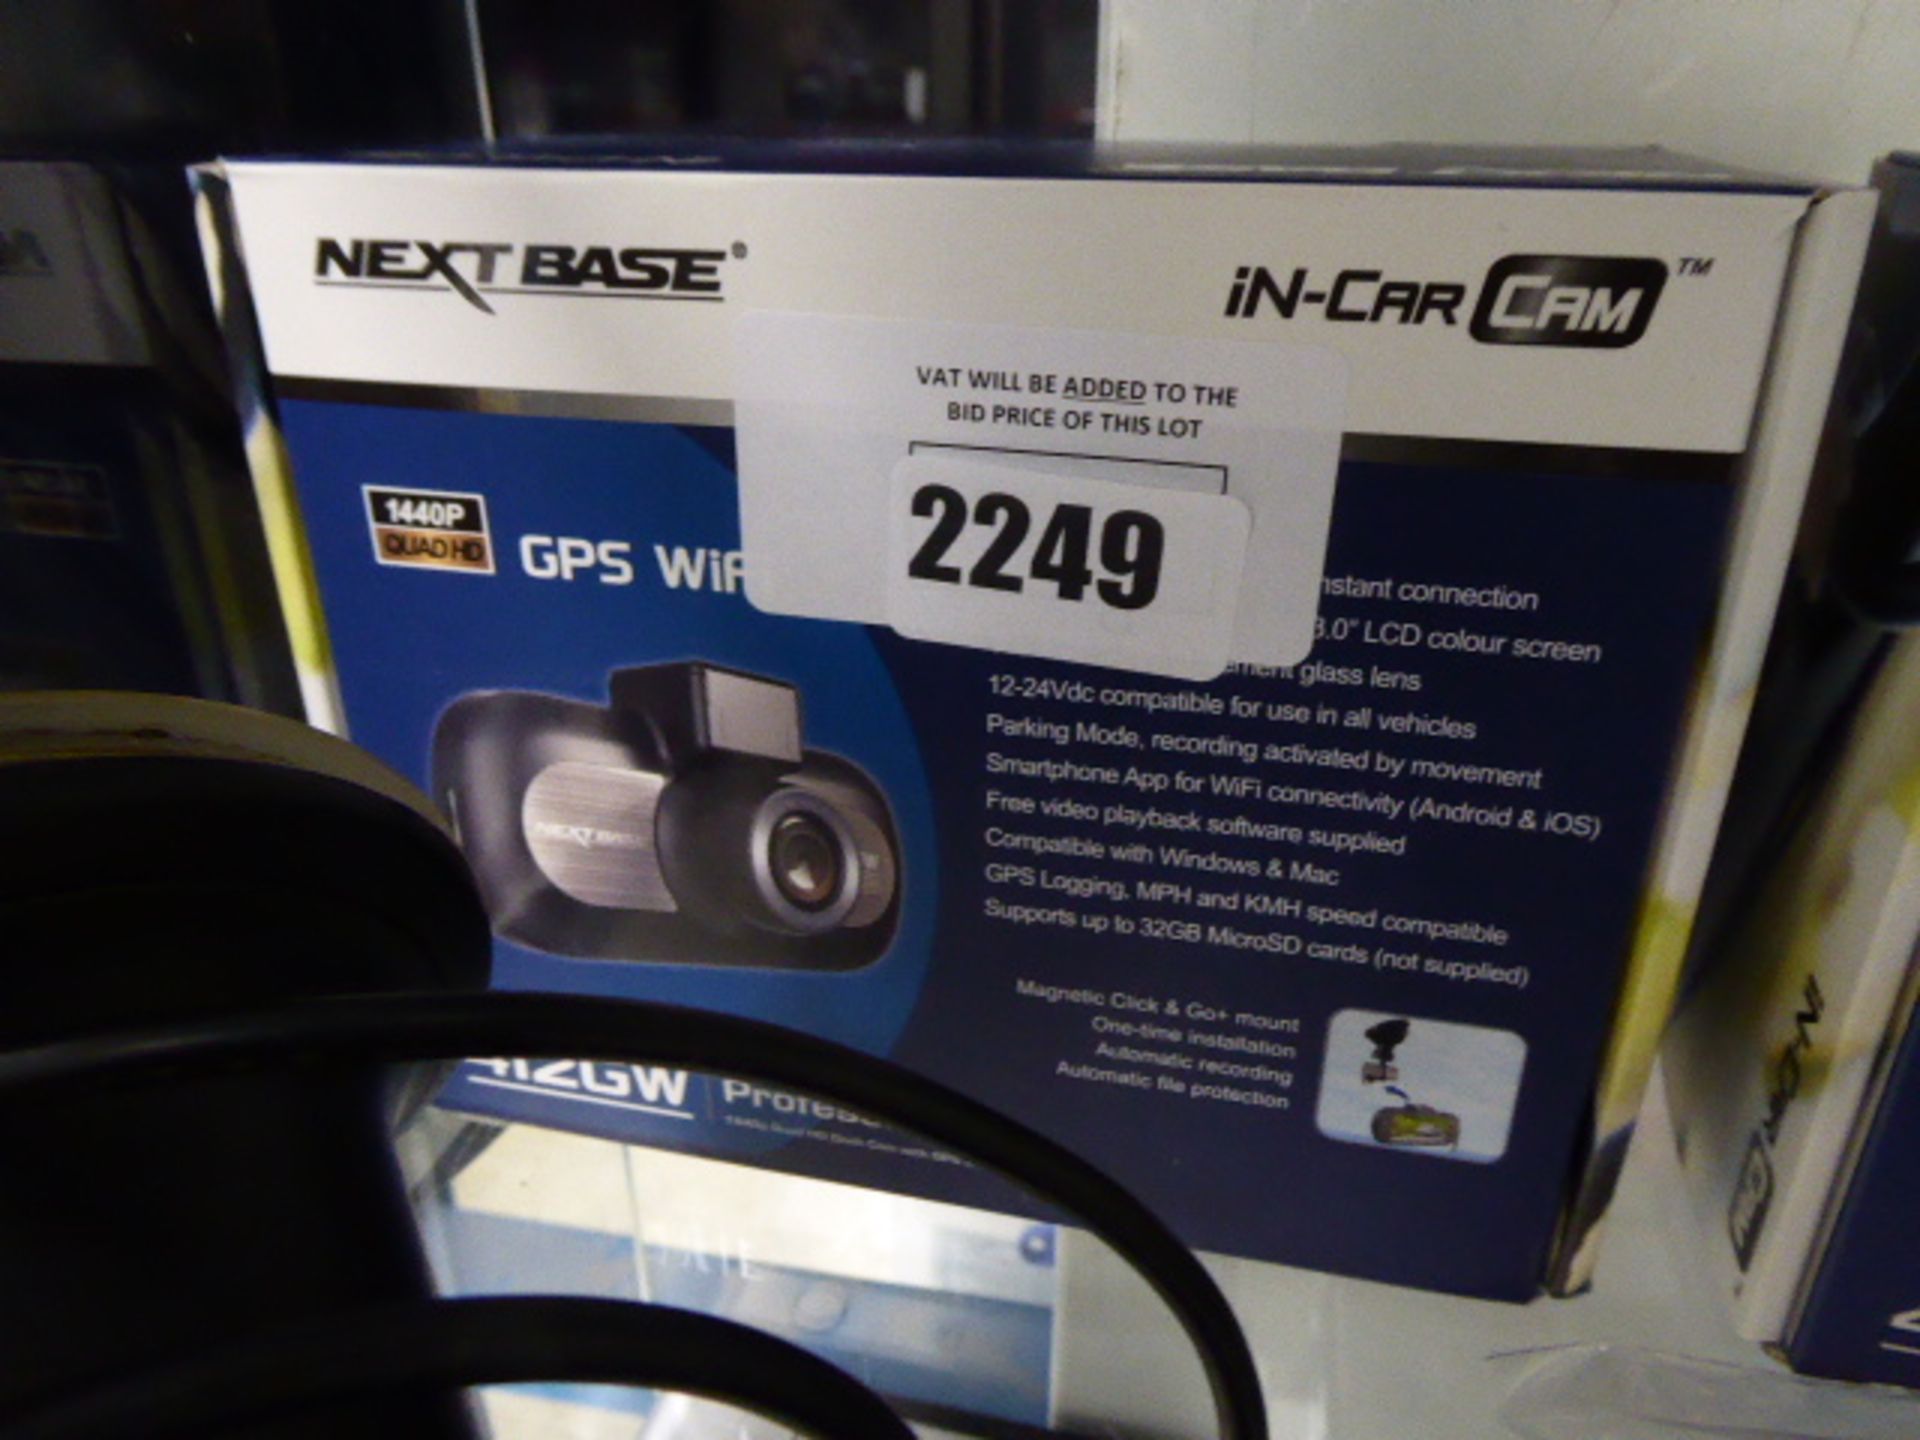 Nexbase in car dash cam model 412GW with box